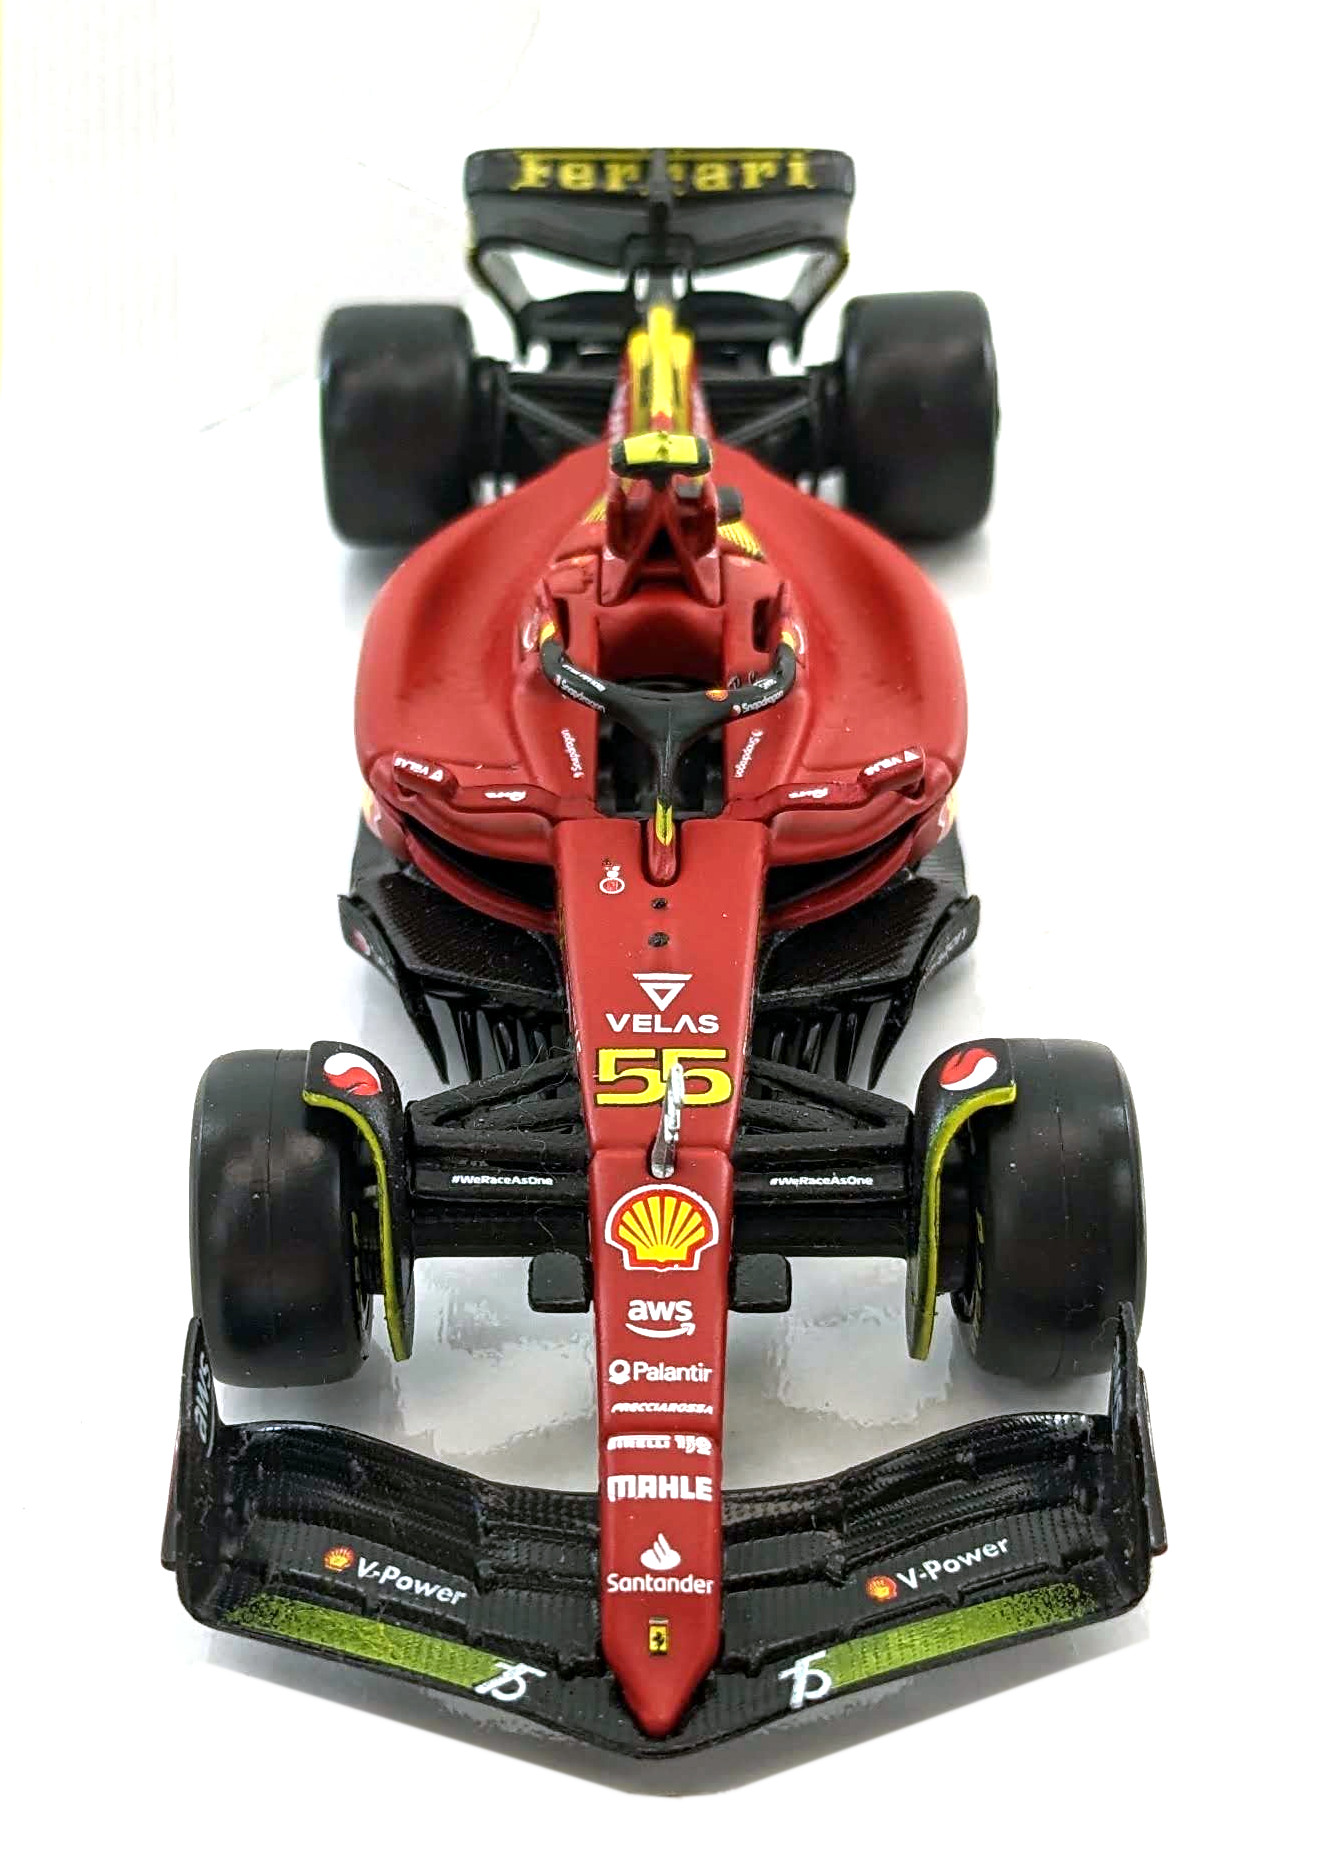 Sainz Monza-Ausführung Ferrari F1-75 Modellauto (Maßstab Spielzeugauto 1:43) 18-36832 BBURAGO #55 -